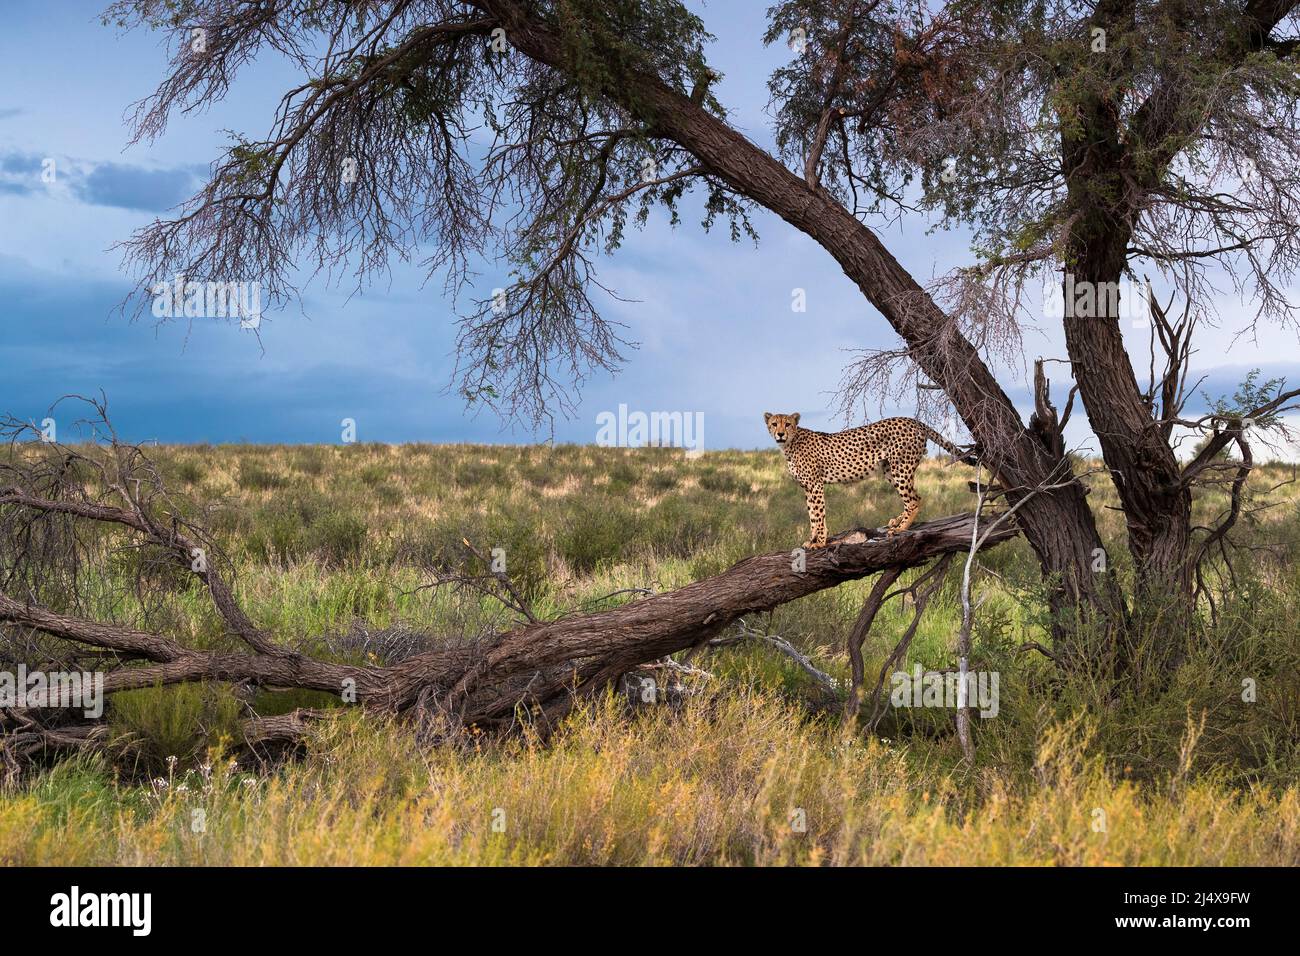 Cheetah (Acinonyx jubatus) männlich im Baum, Kgalagadi Transfrontier Park, Nordkap, Südafrika, Februar 2022 Stockfoto